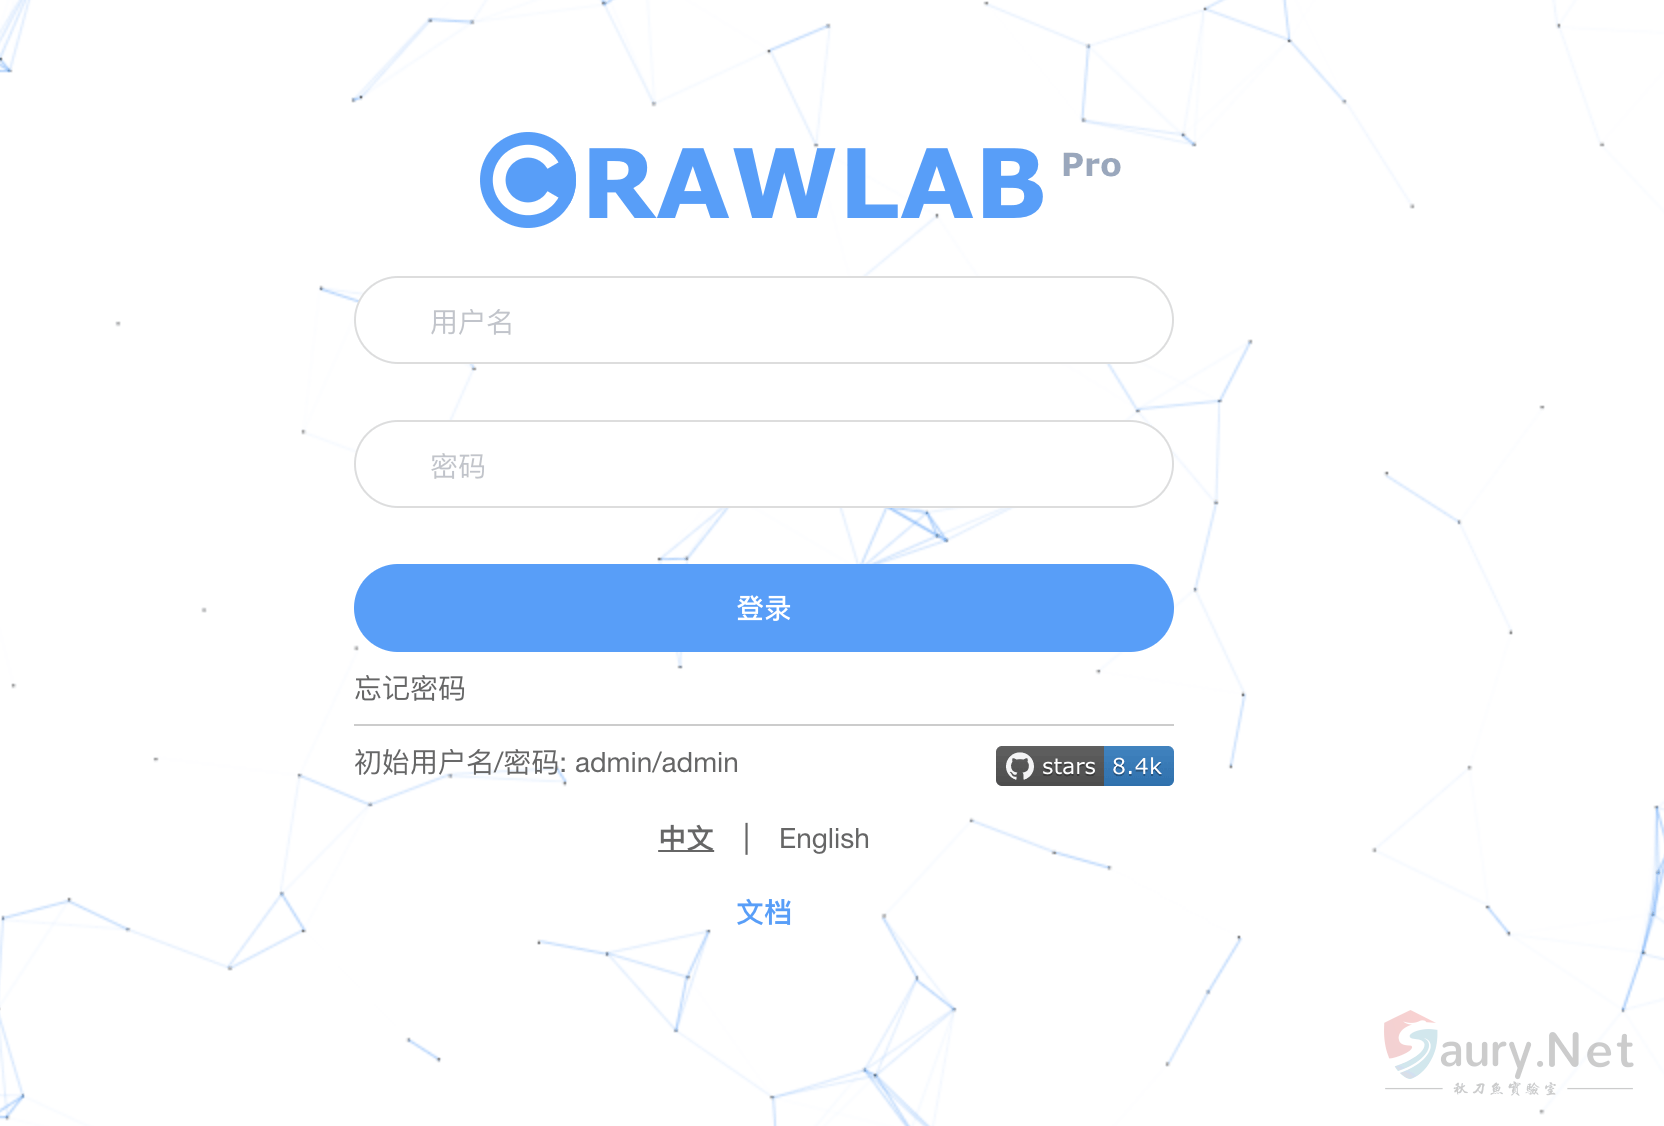 Crawlab users 任意用户添加漏洞-秋刀鱼实验室